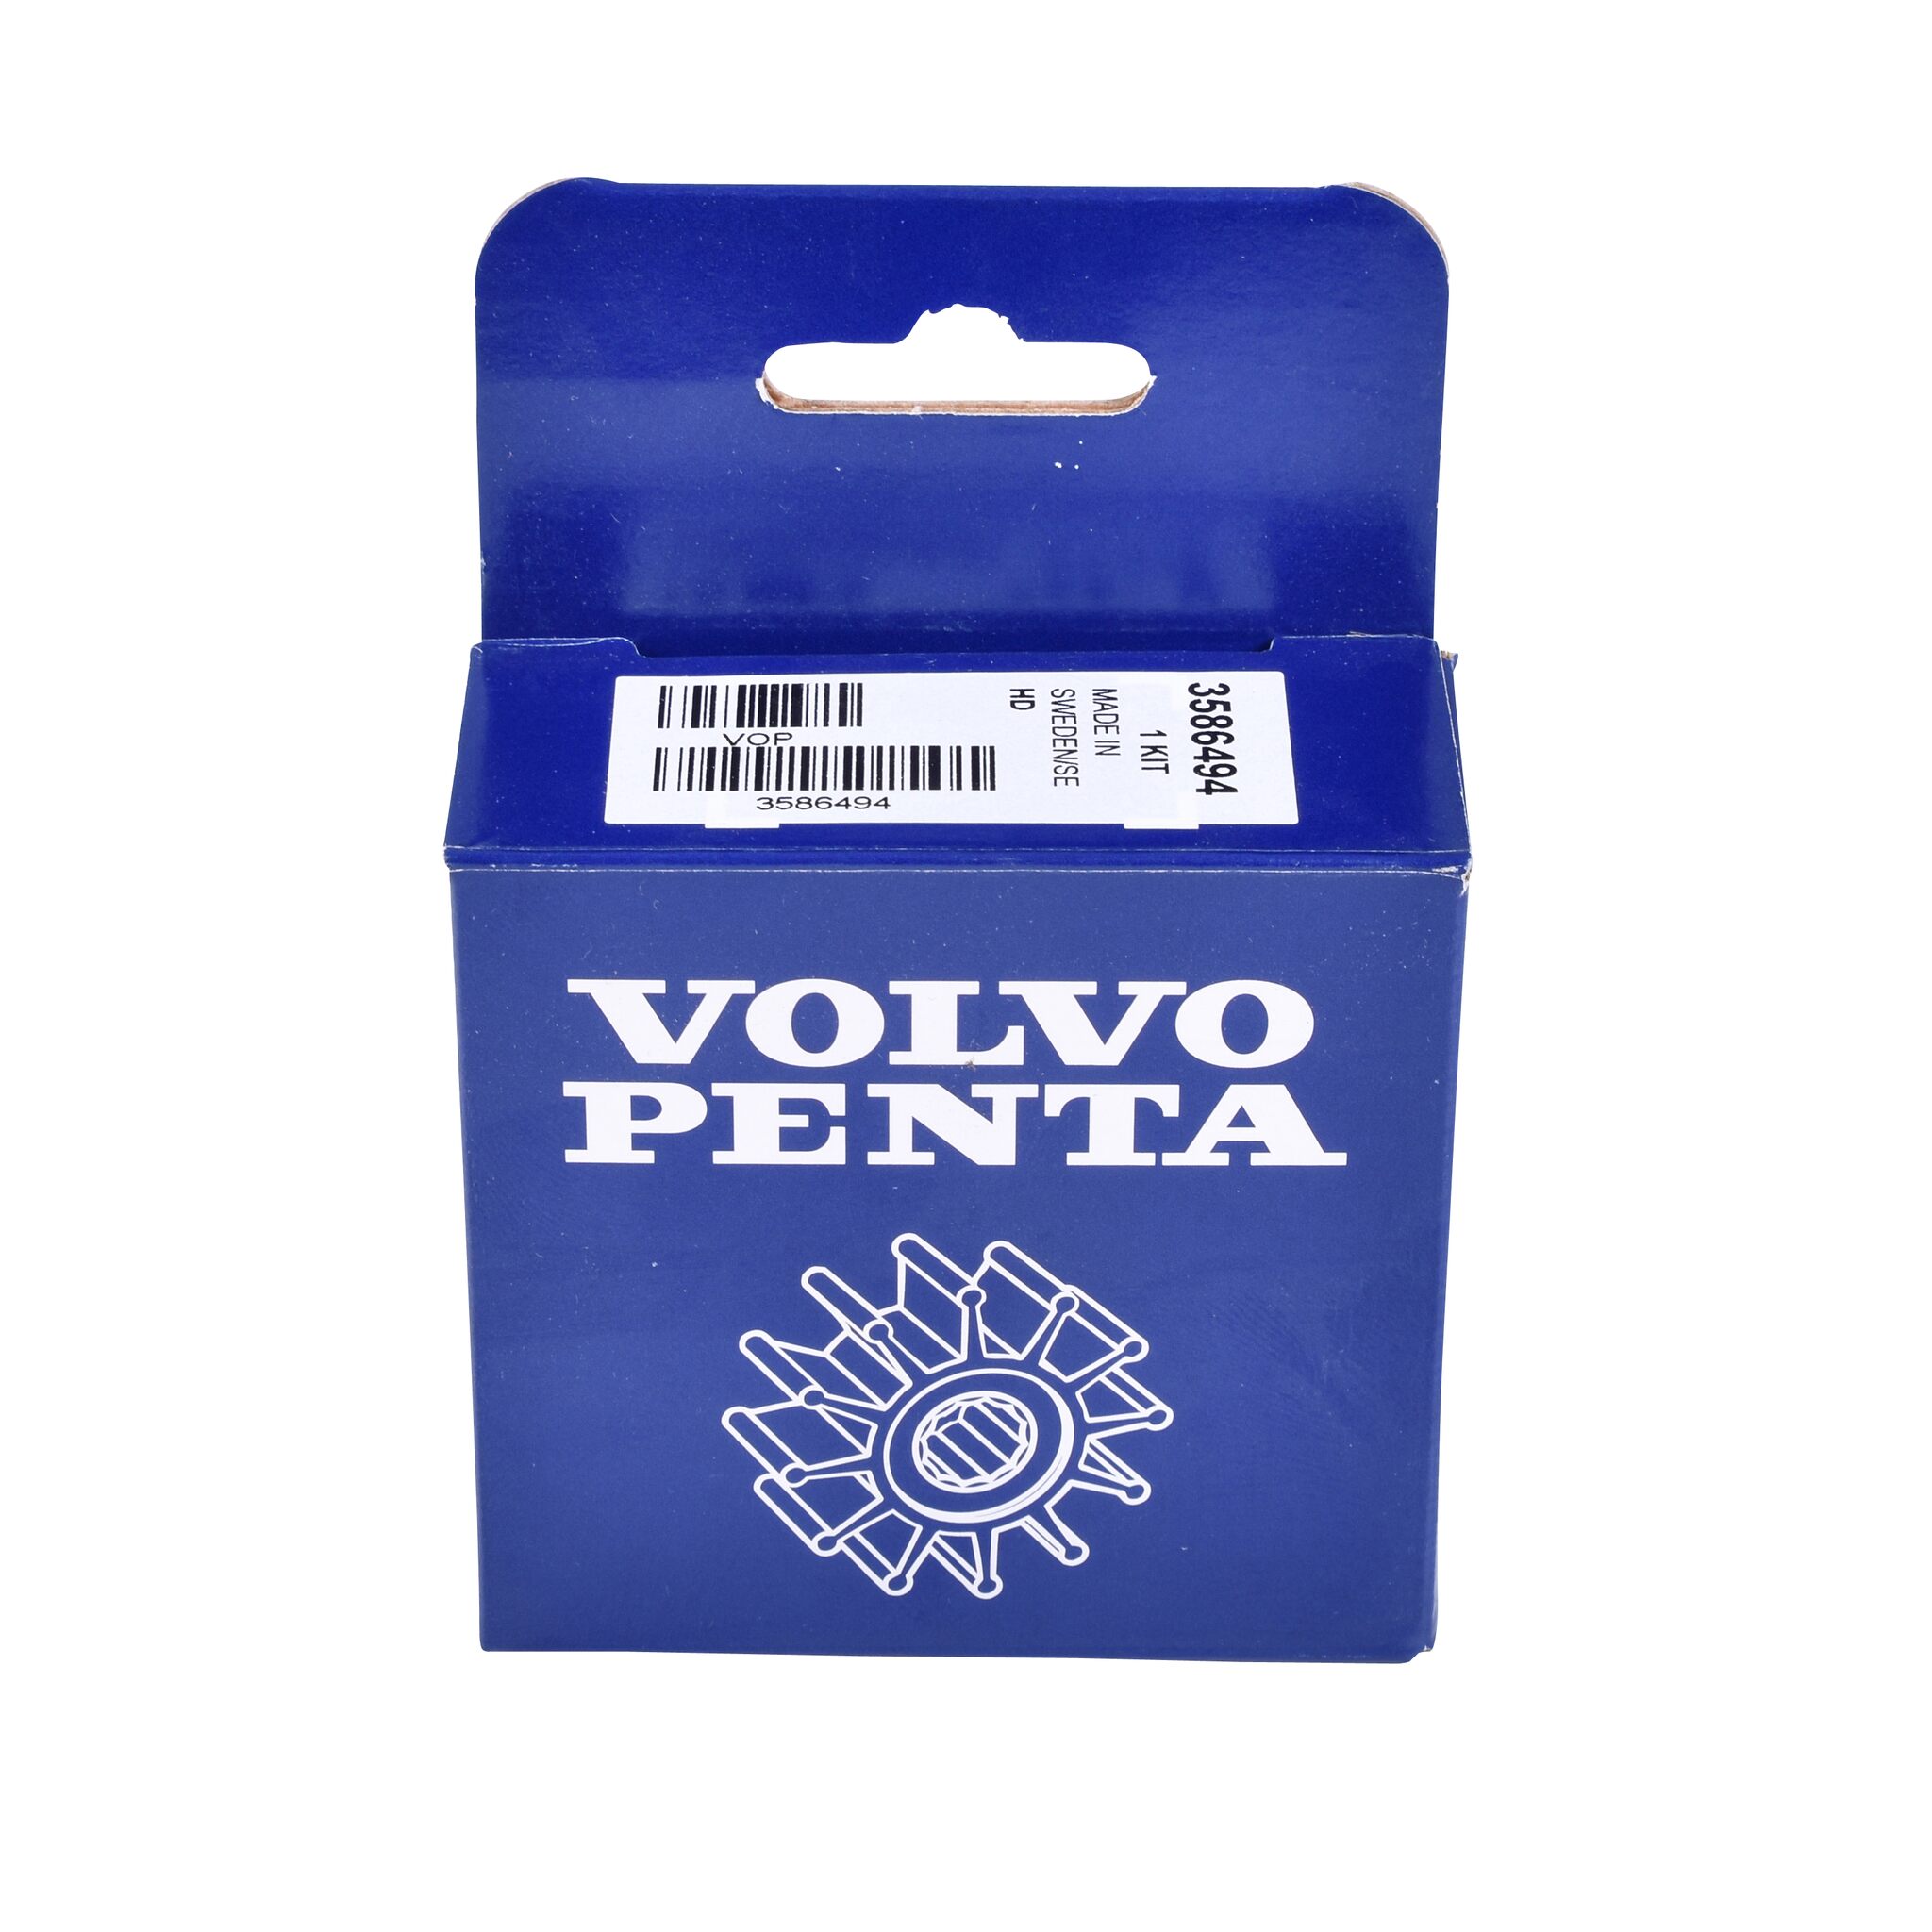 Volvo Penta Impellerersatz